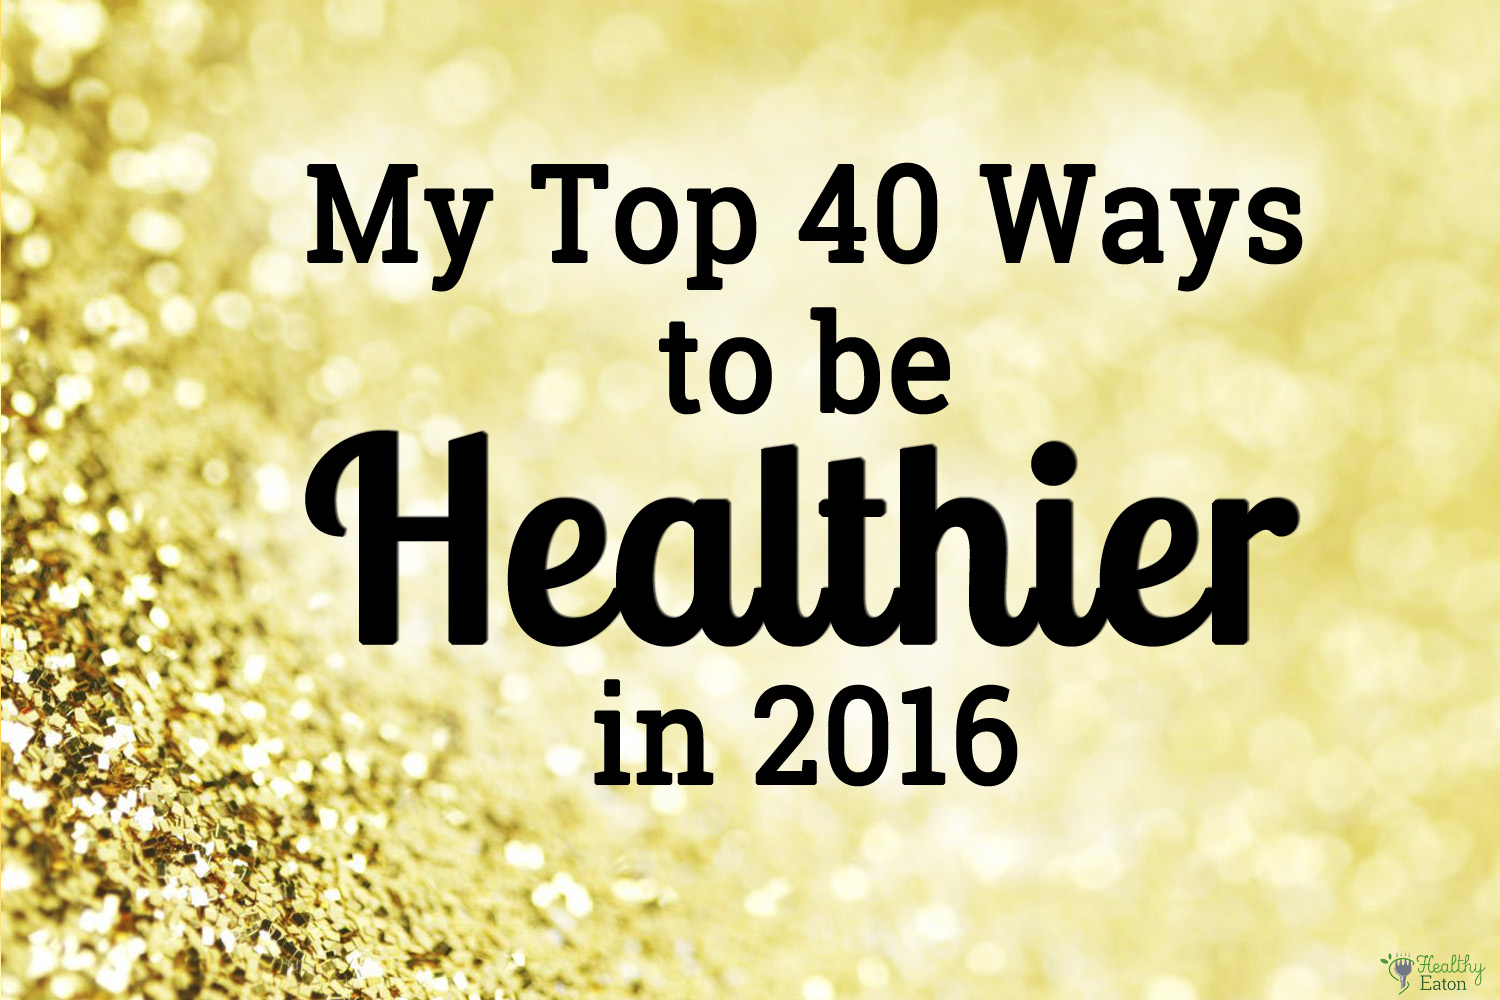 My Top 40 Ways to be Healthier in 2016